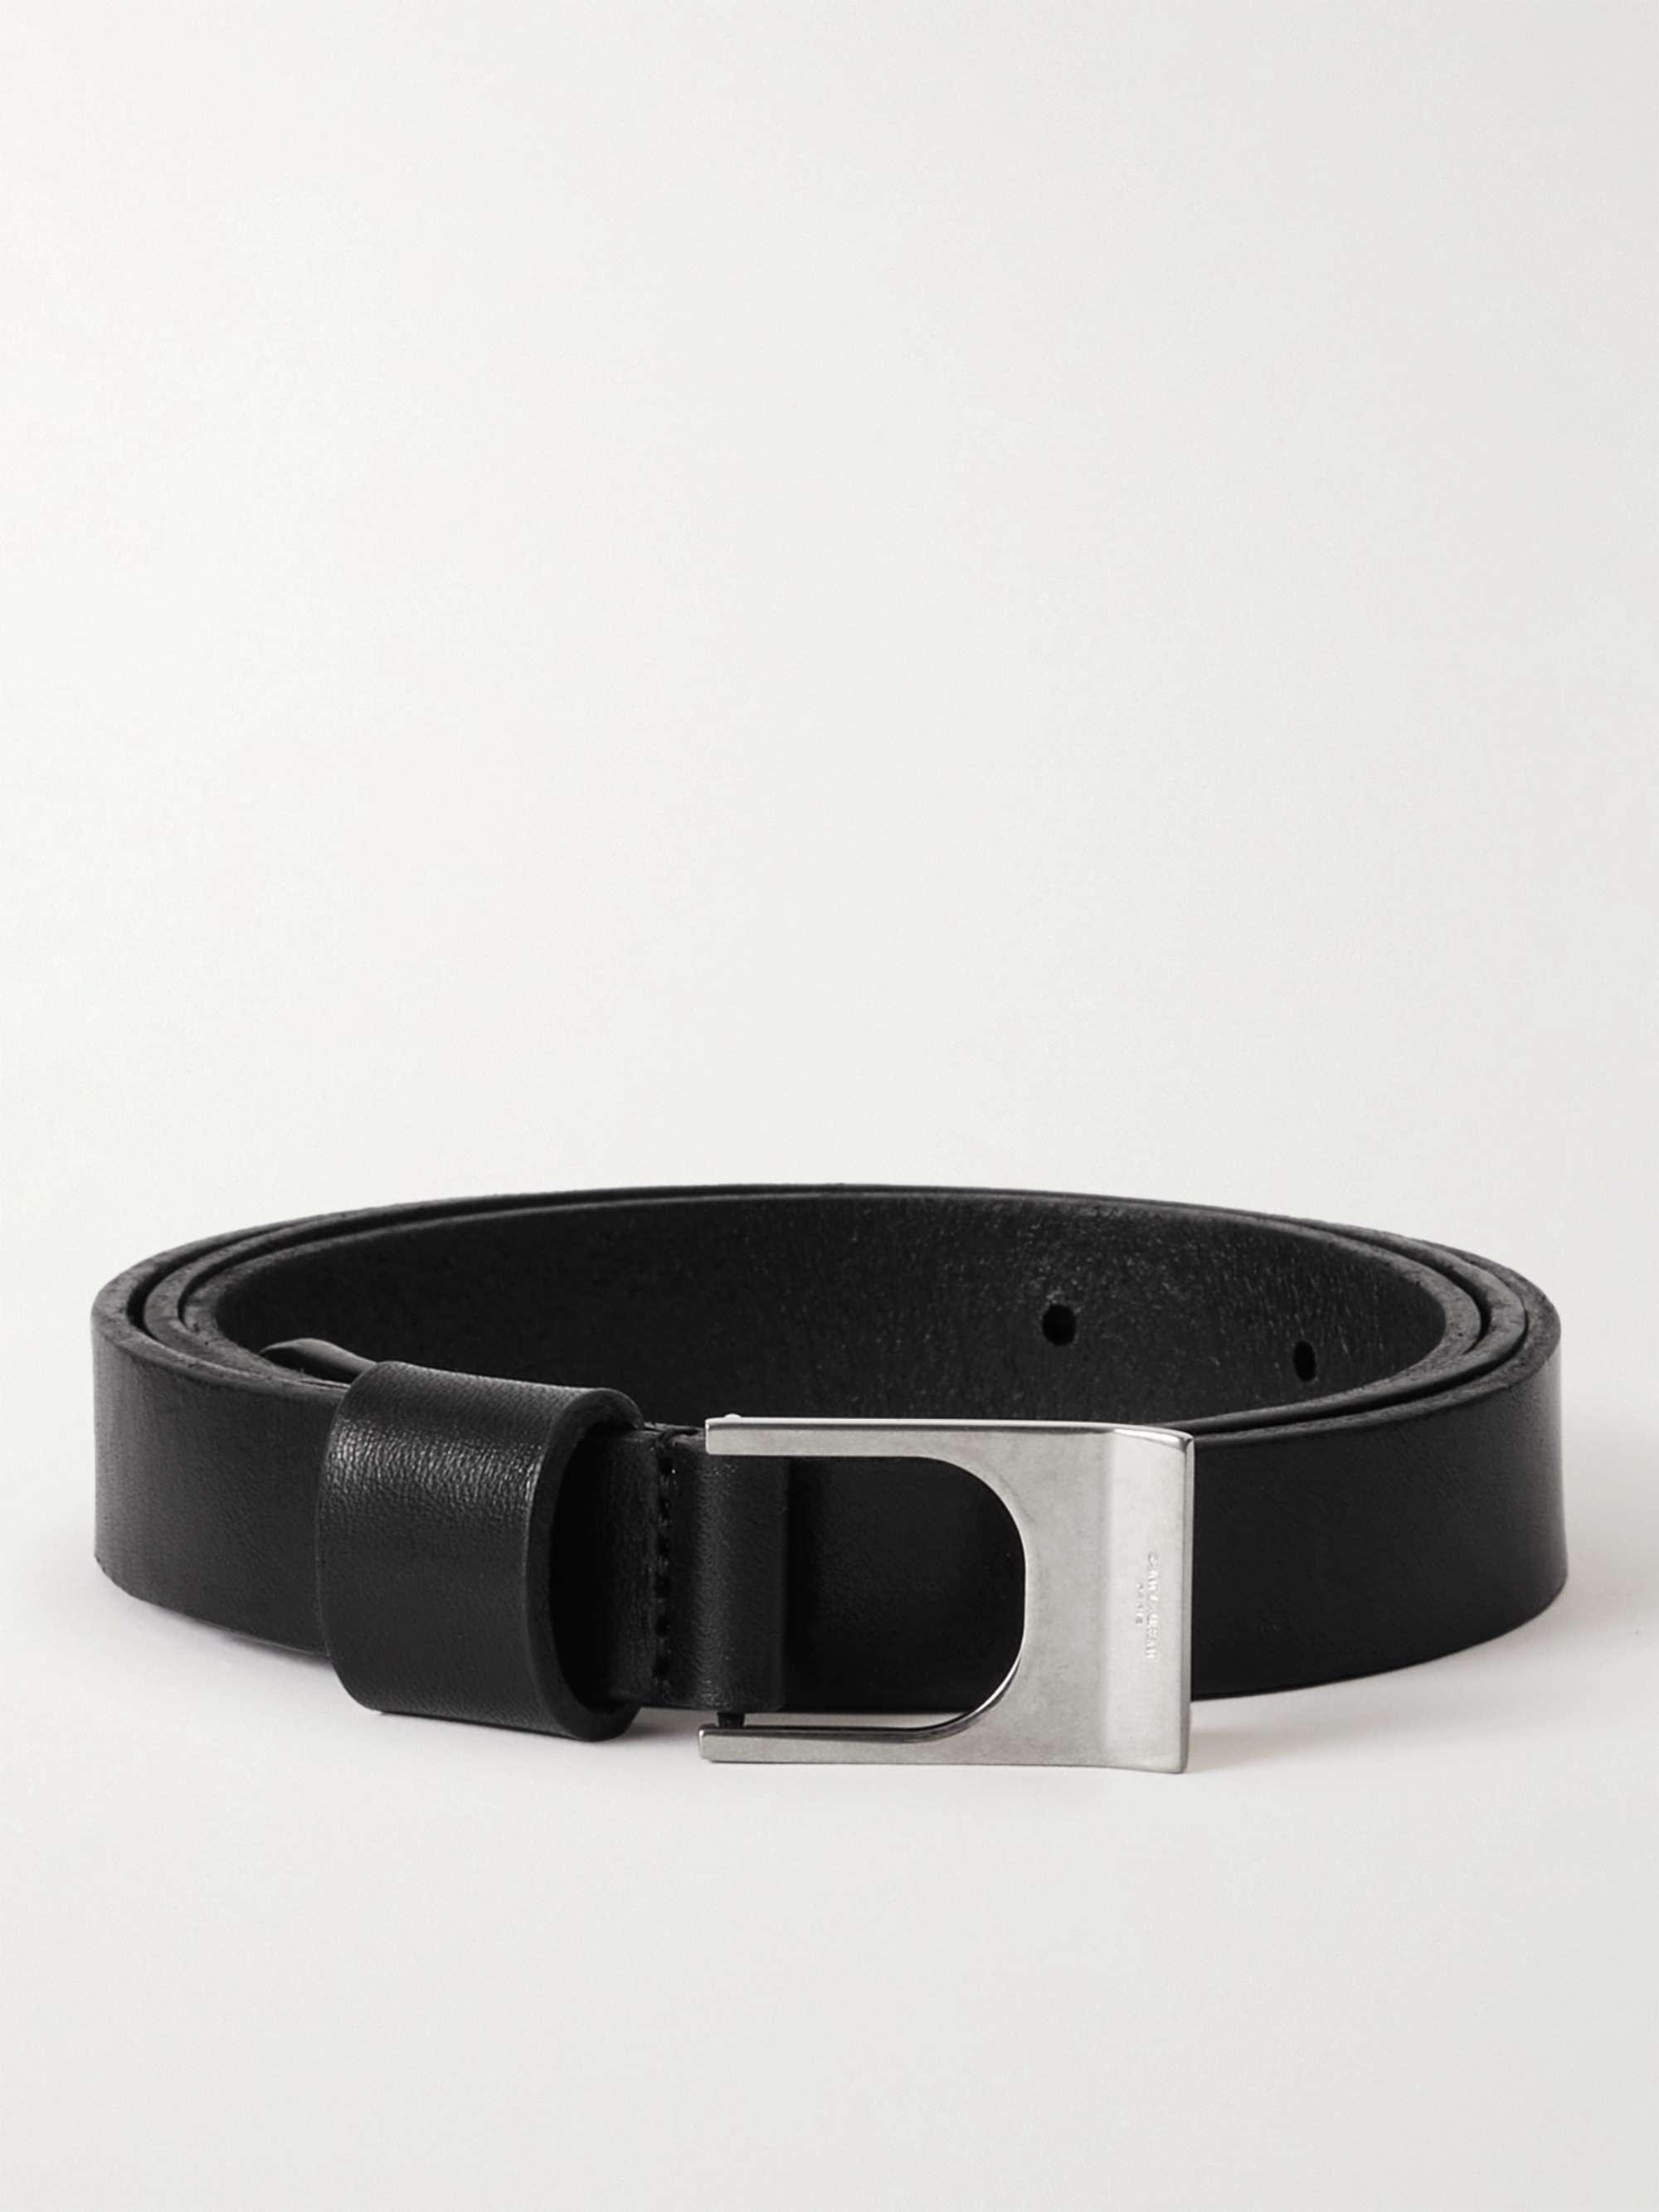 Mens Belts Saint Laurent Belts for Men Saint Laurent 2cm Ysl Buckle Leather Belt in Black White 